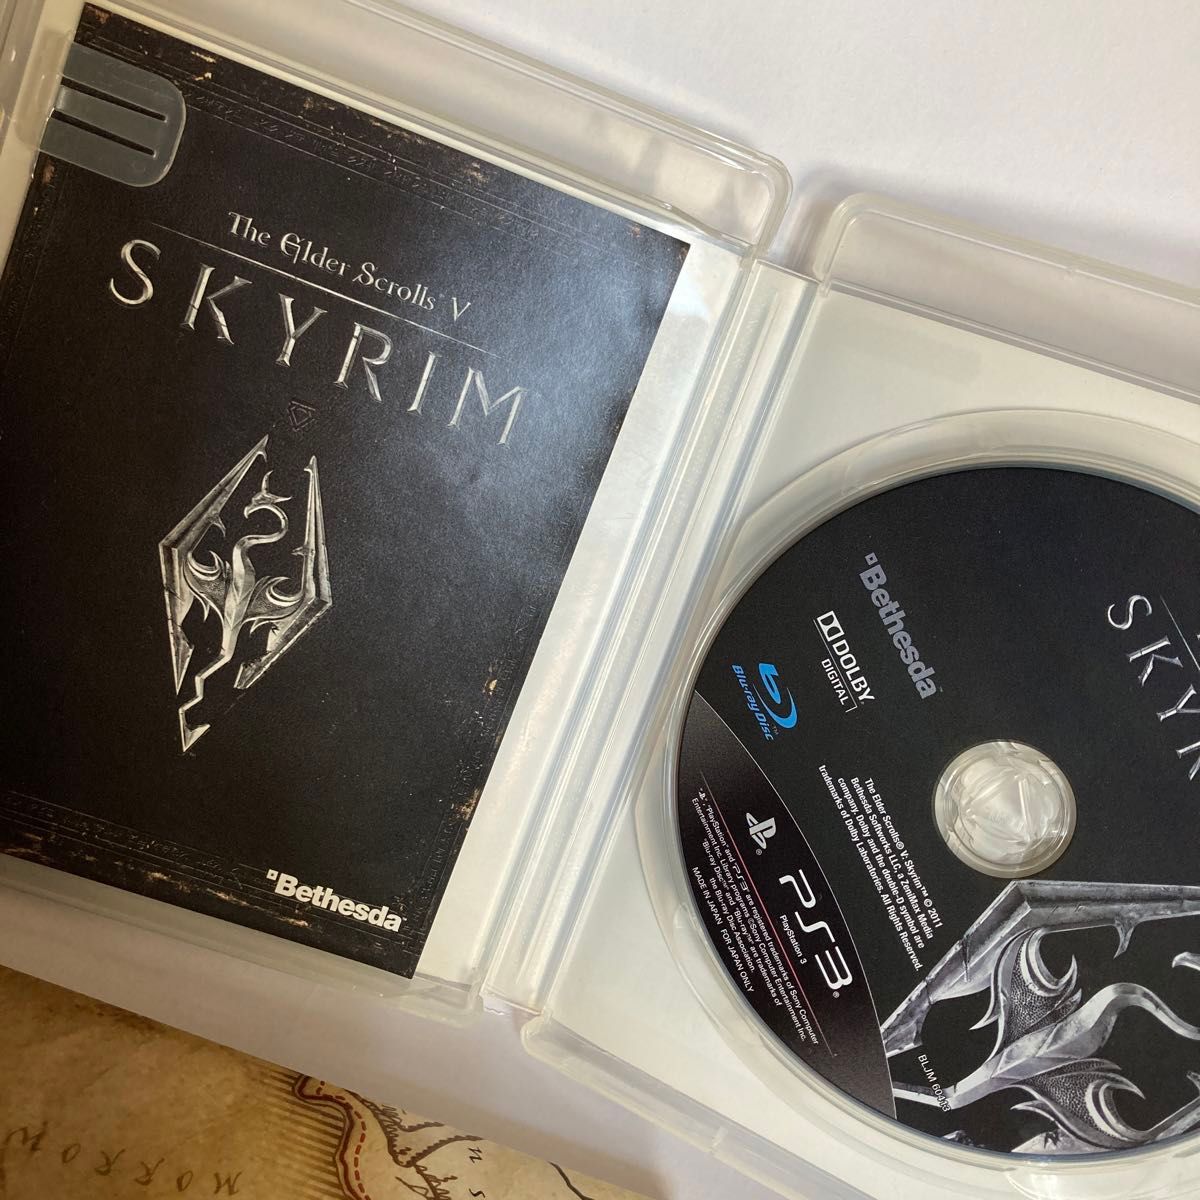 【PS3】 The Elder Scrolls V ： Skyrim [通常版］